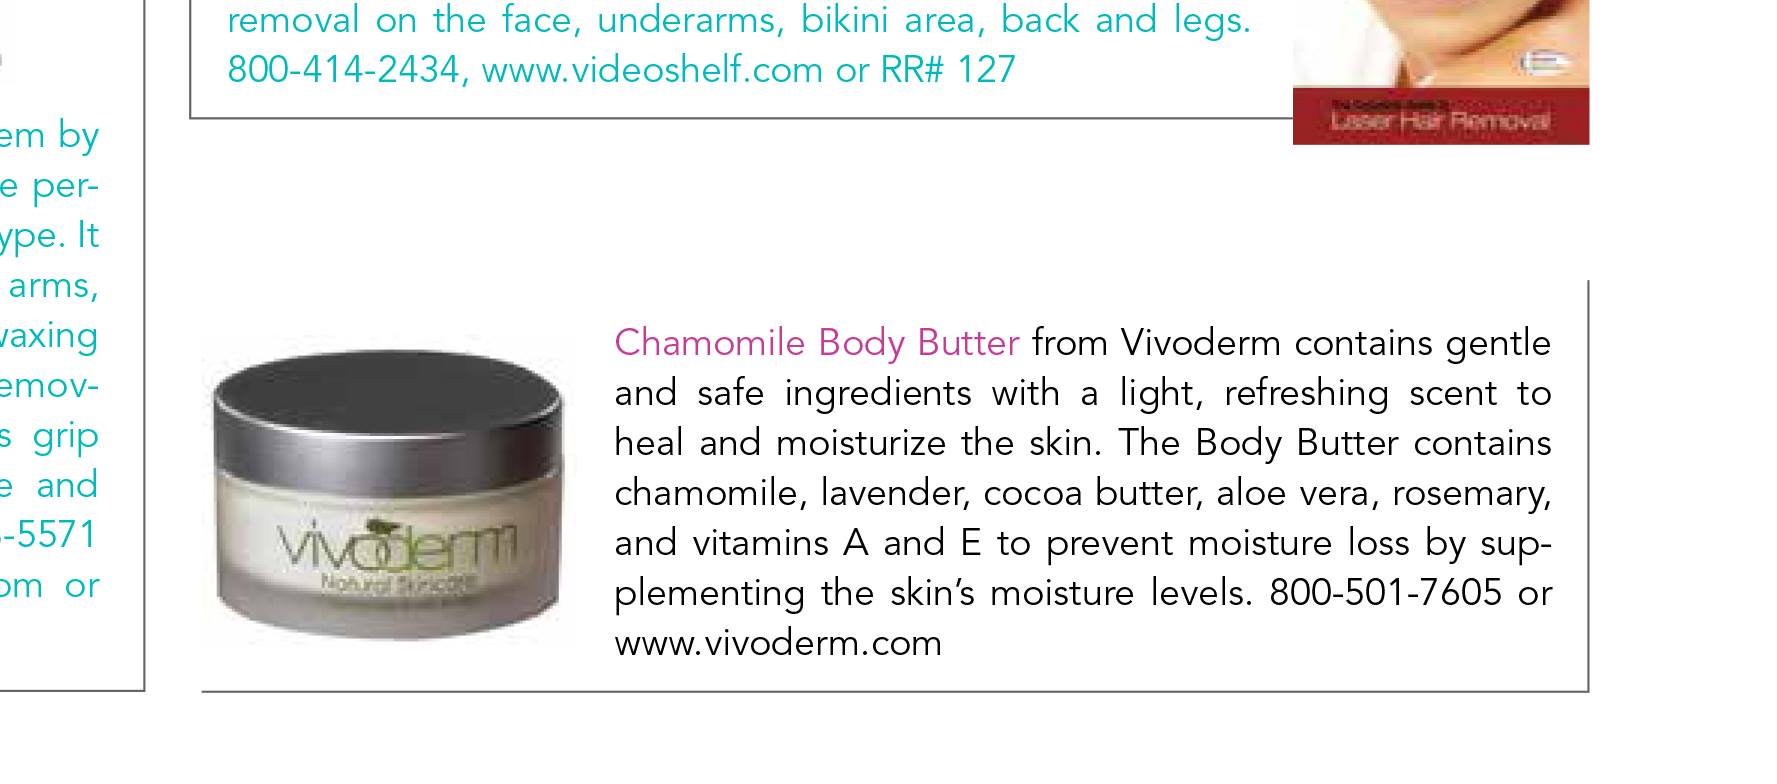 The Vivoderm Chamomile Body Butter natural skin moisturizer